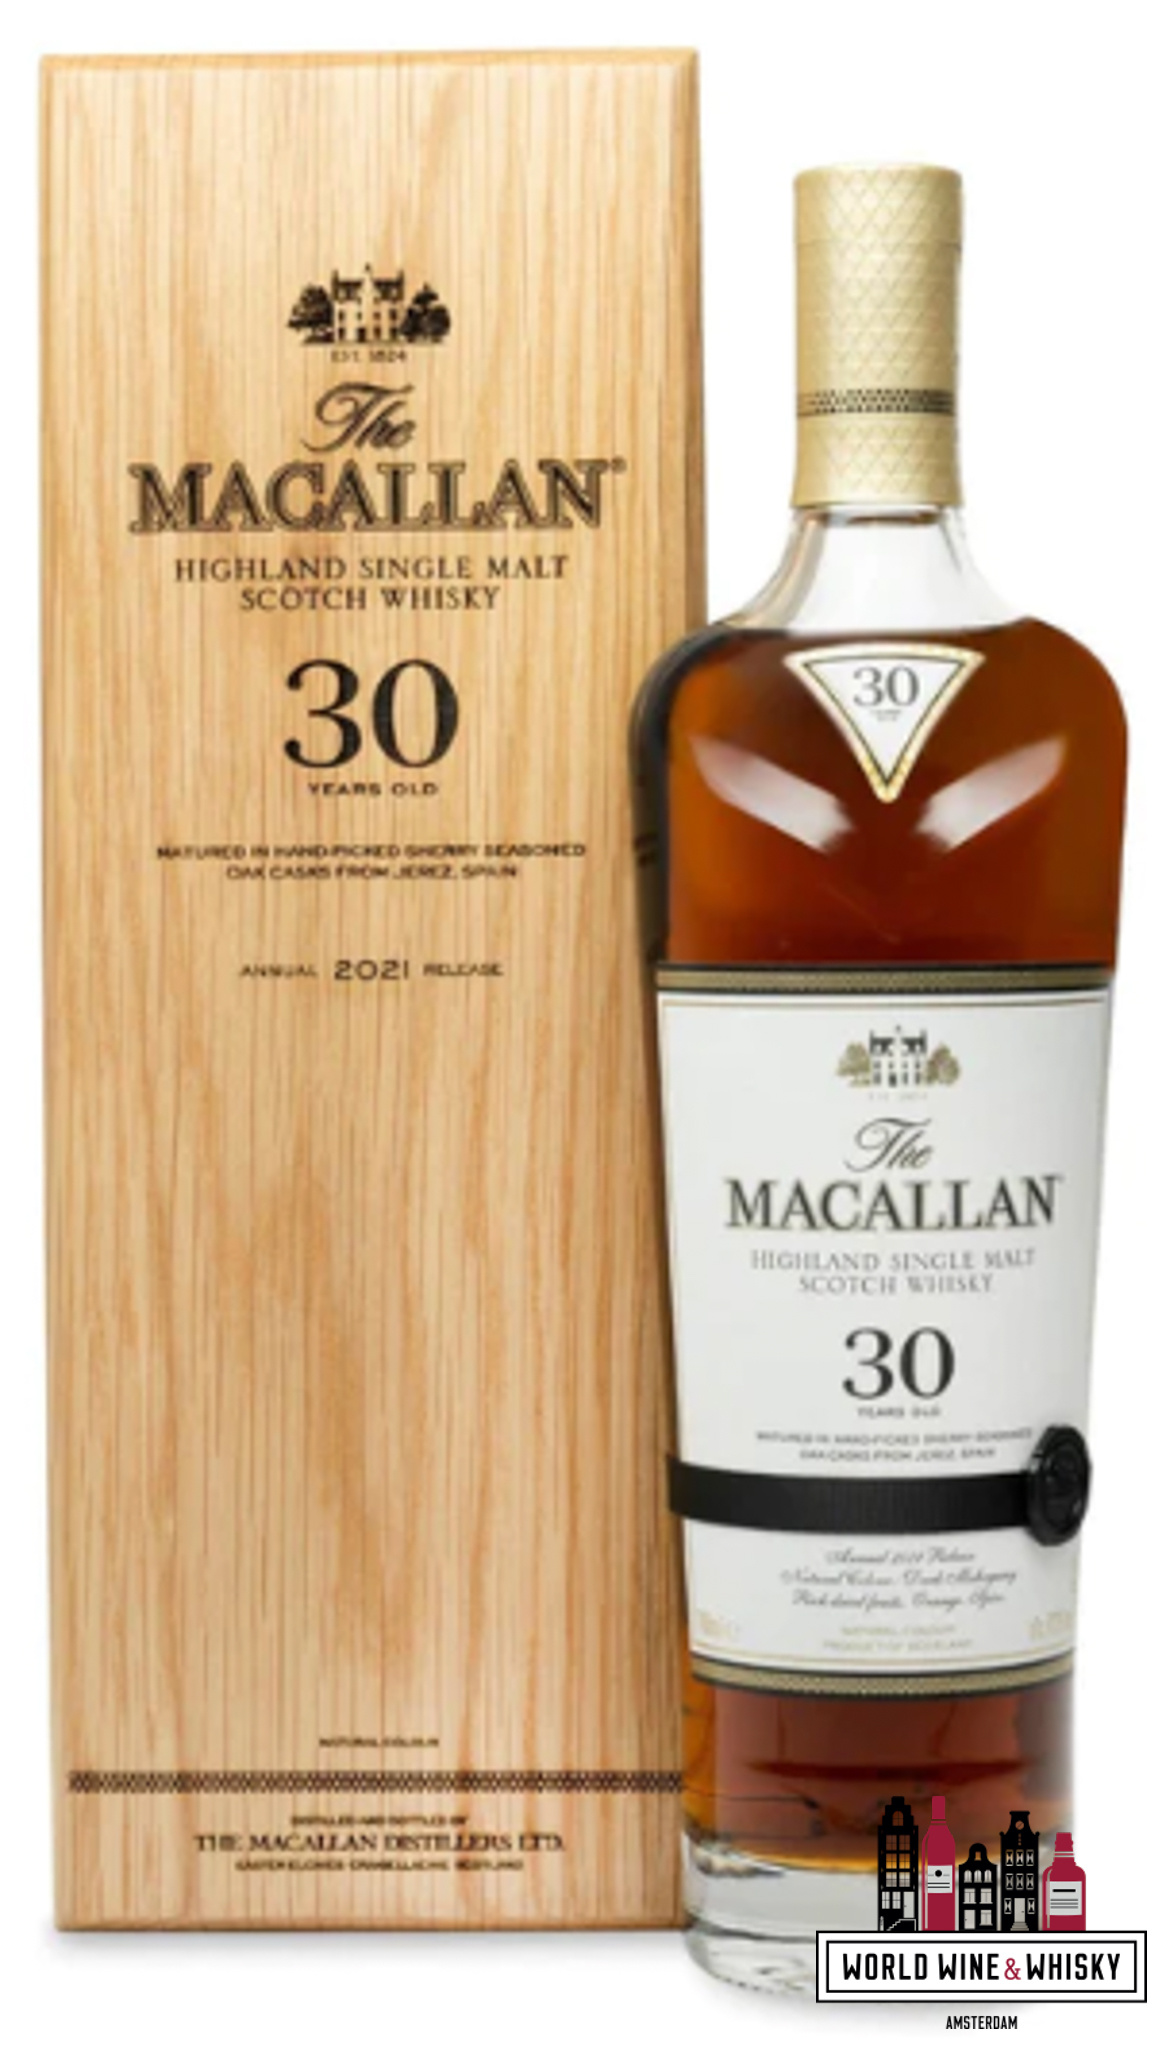 Macallan Macallan 30 Years Old - Sherry Casks - Annual 2021 Release 43% (in luxury wooden case)